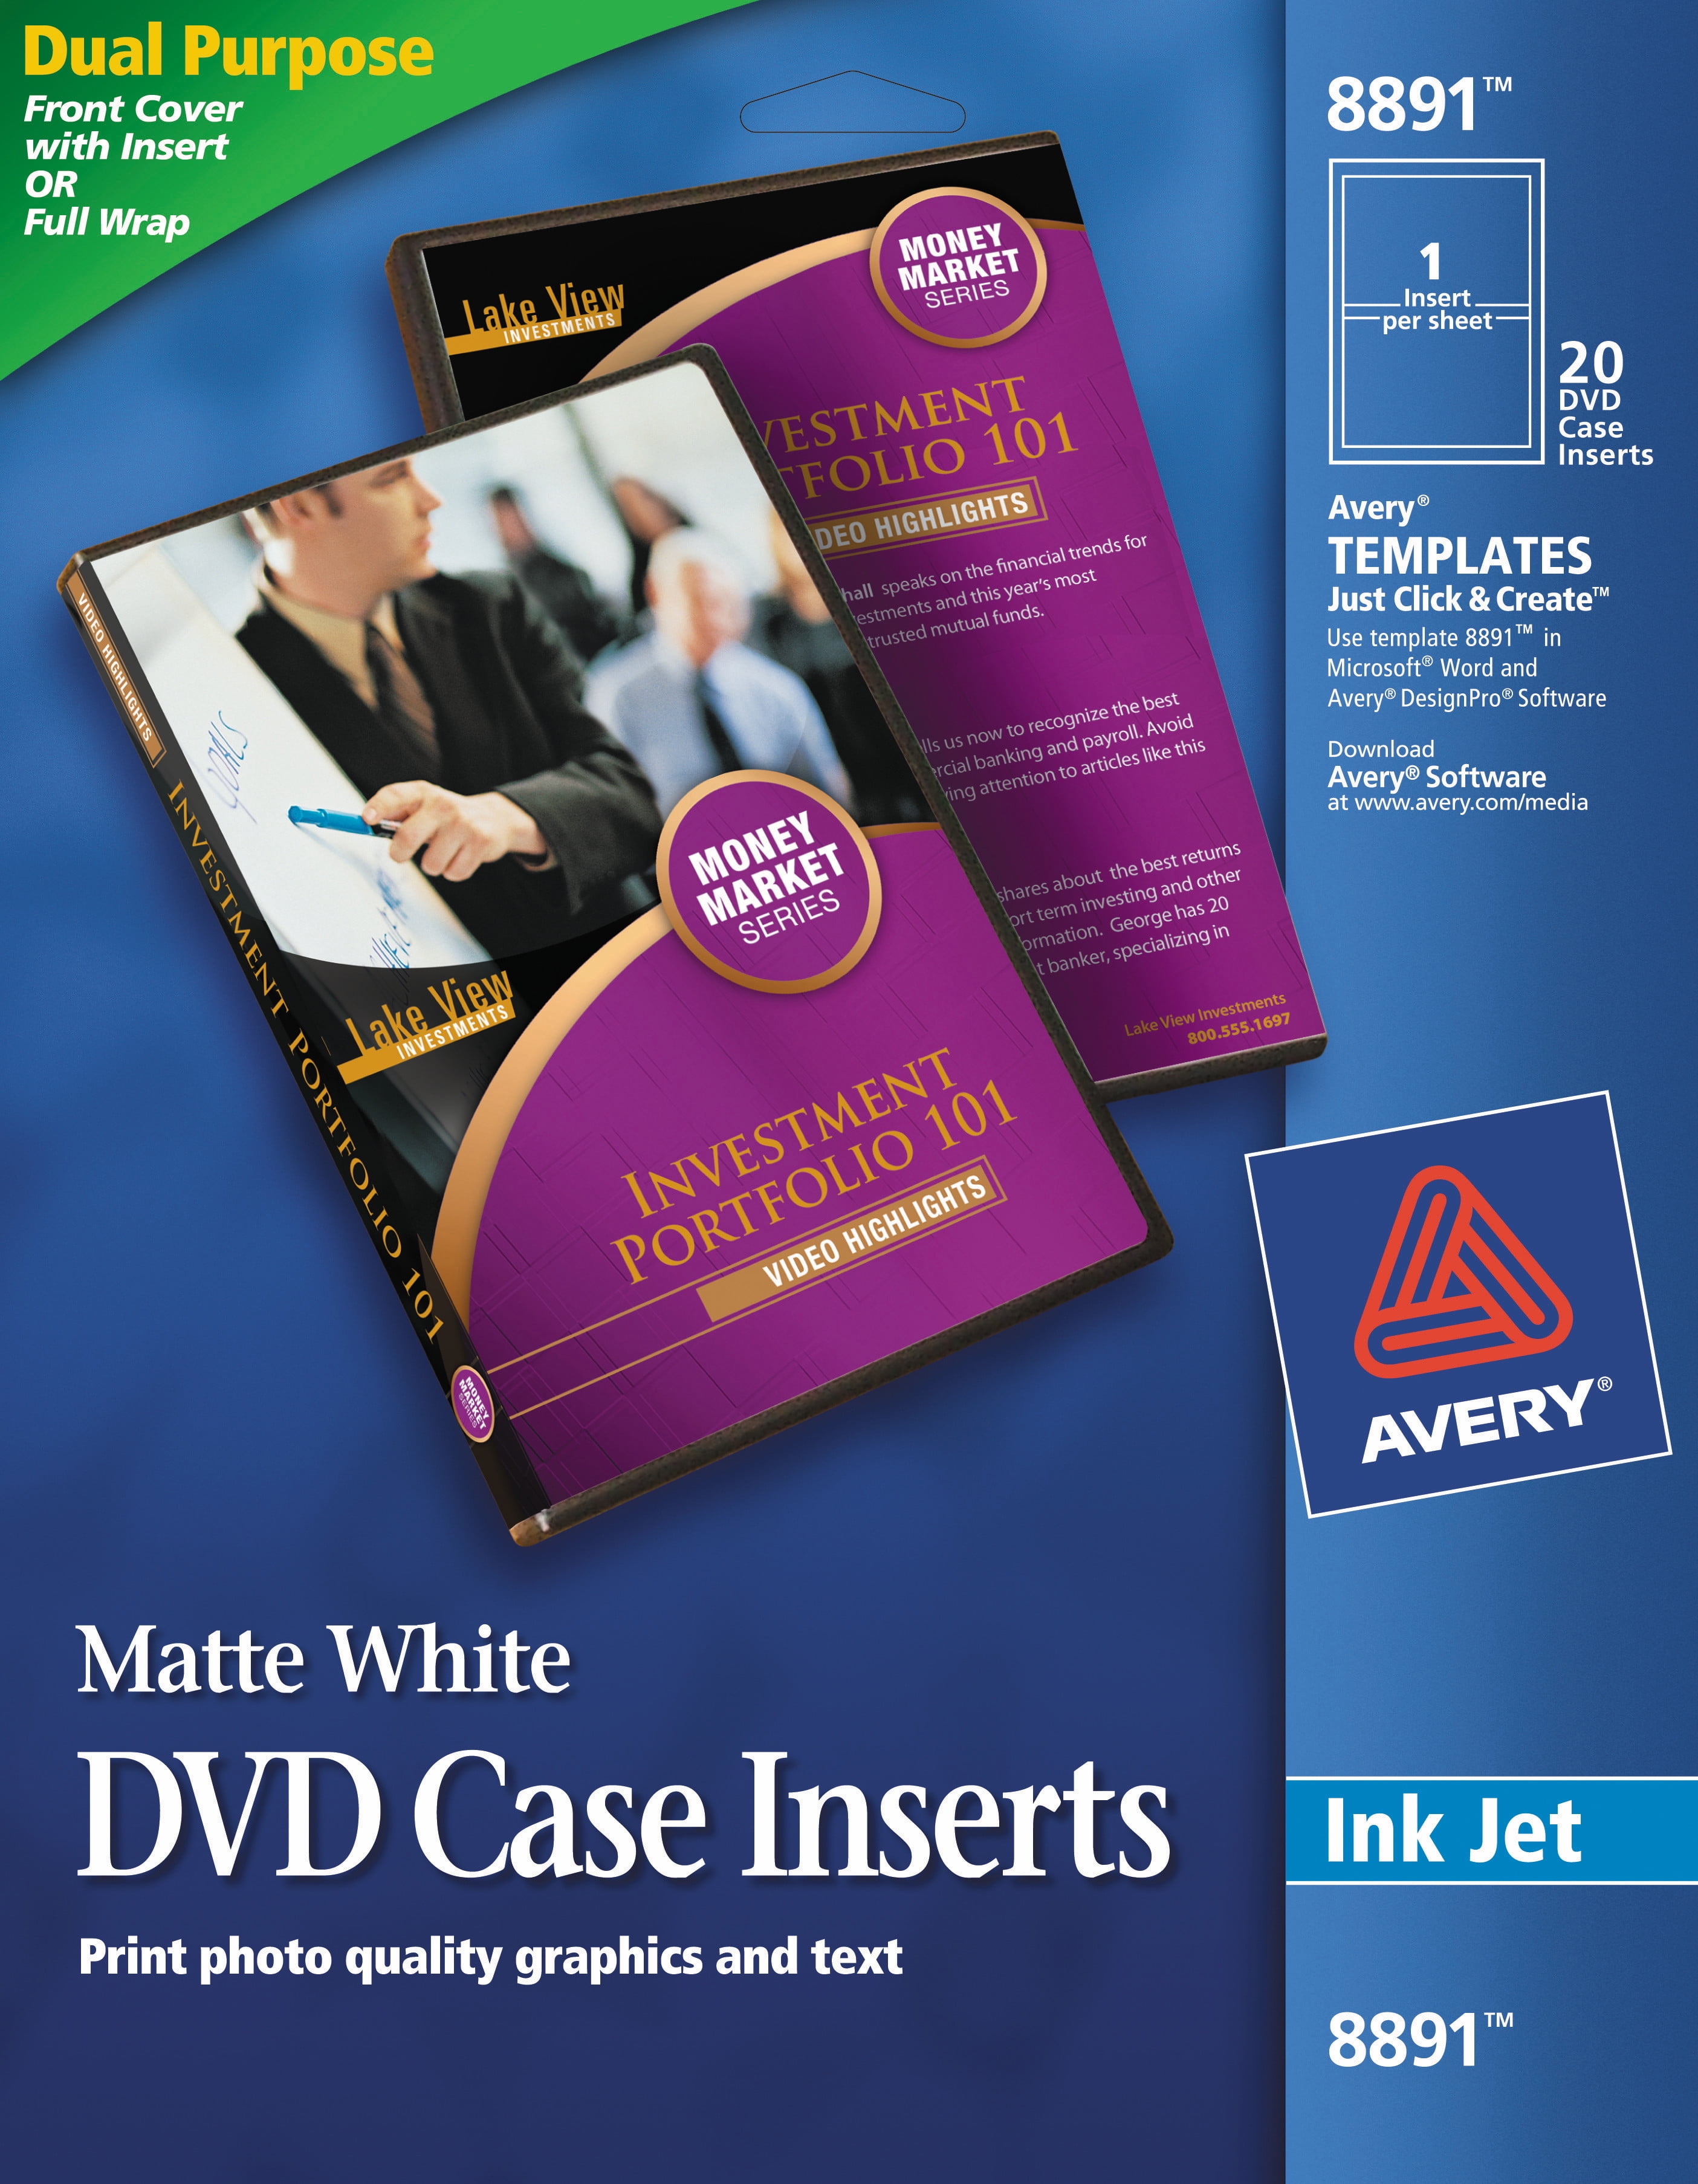 avery-matte-white-dvd-case-inserts-20-inserts-8891-walmart